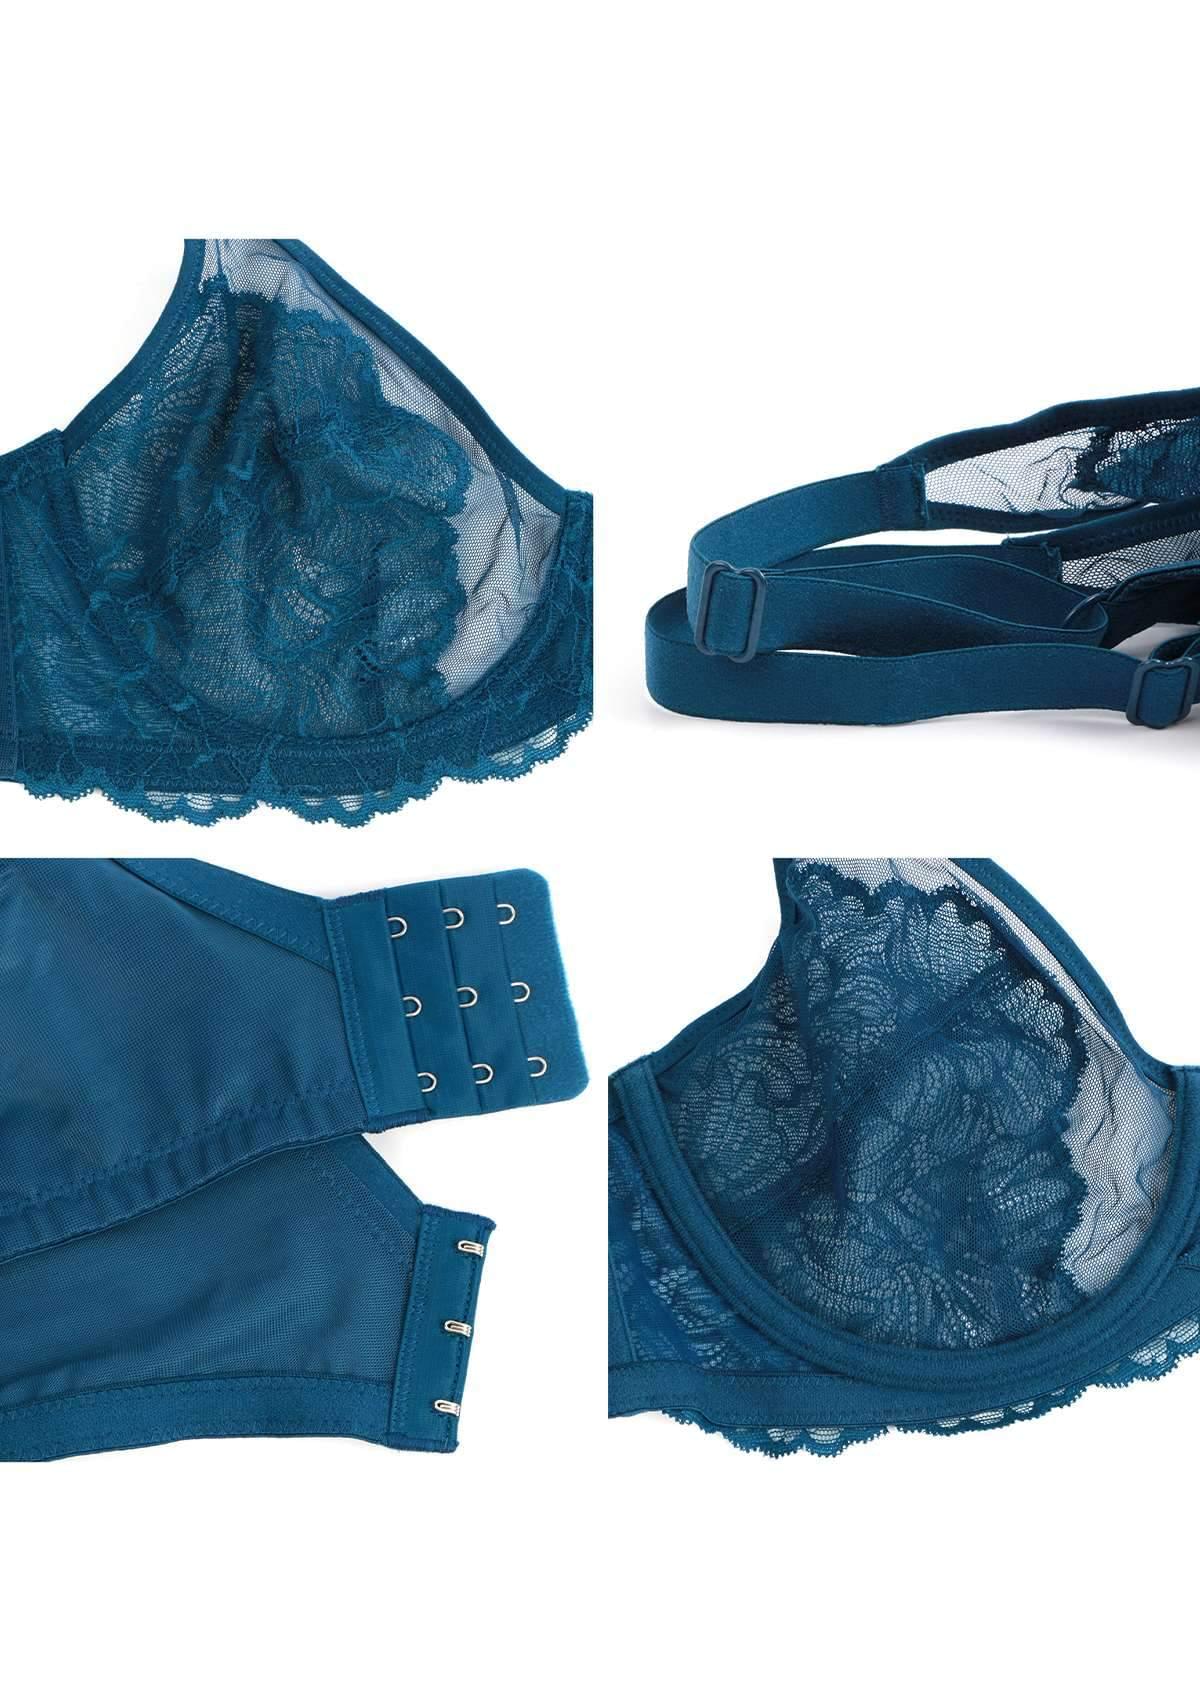 HSIA Blossom Lace Bra And Underwear Sets: Comfortable Plus Size Bra - Biscay Blue / 36 / DDD/F